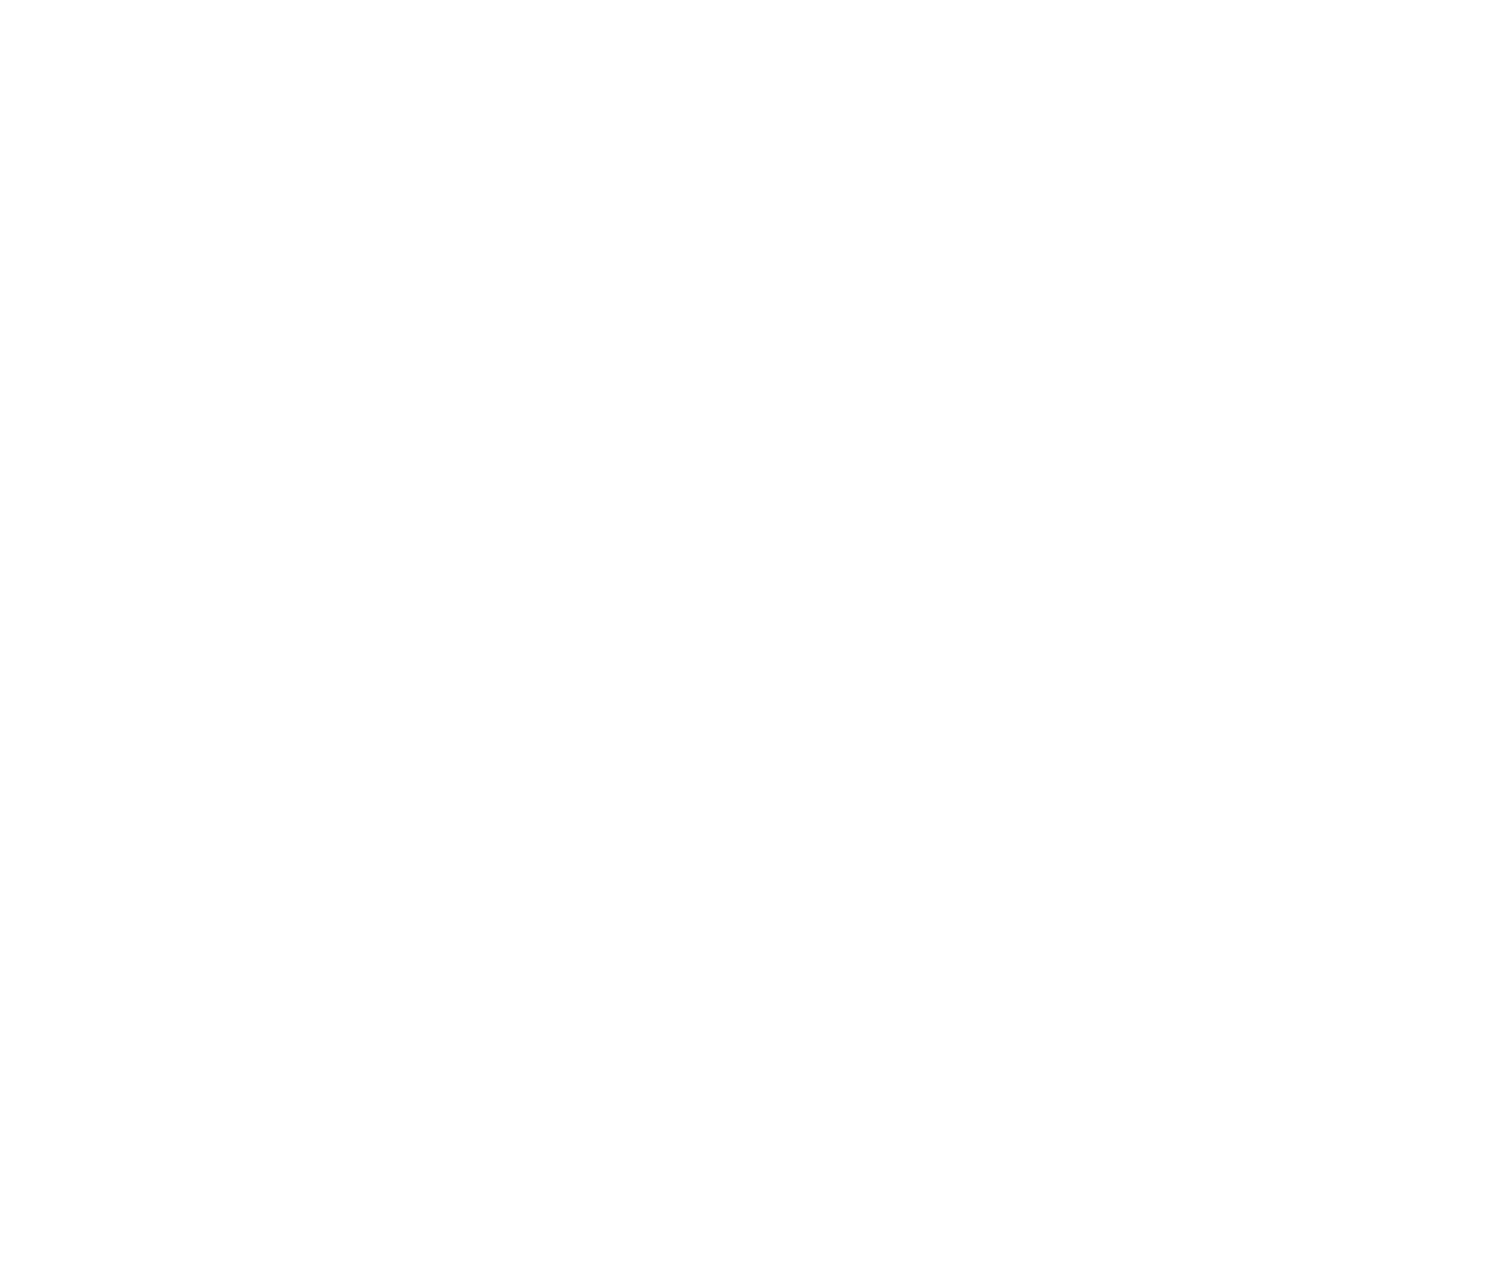 GOOD TROUBLE FILMS